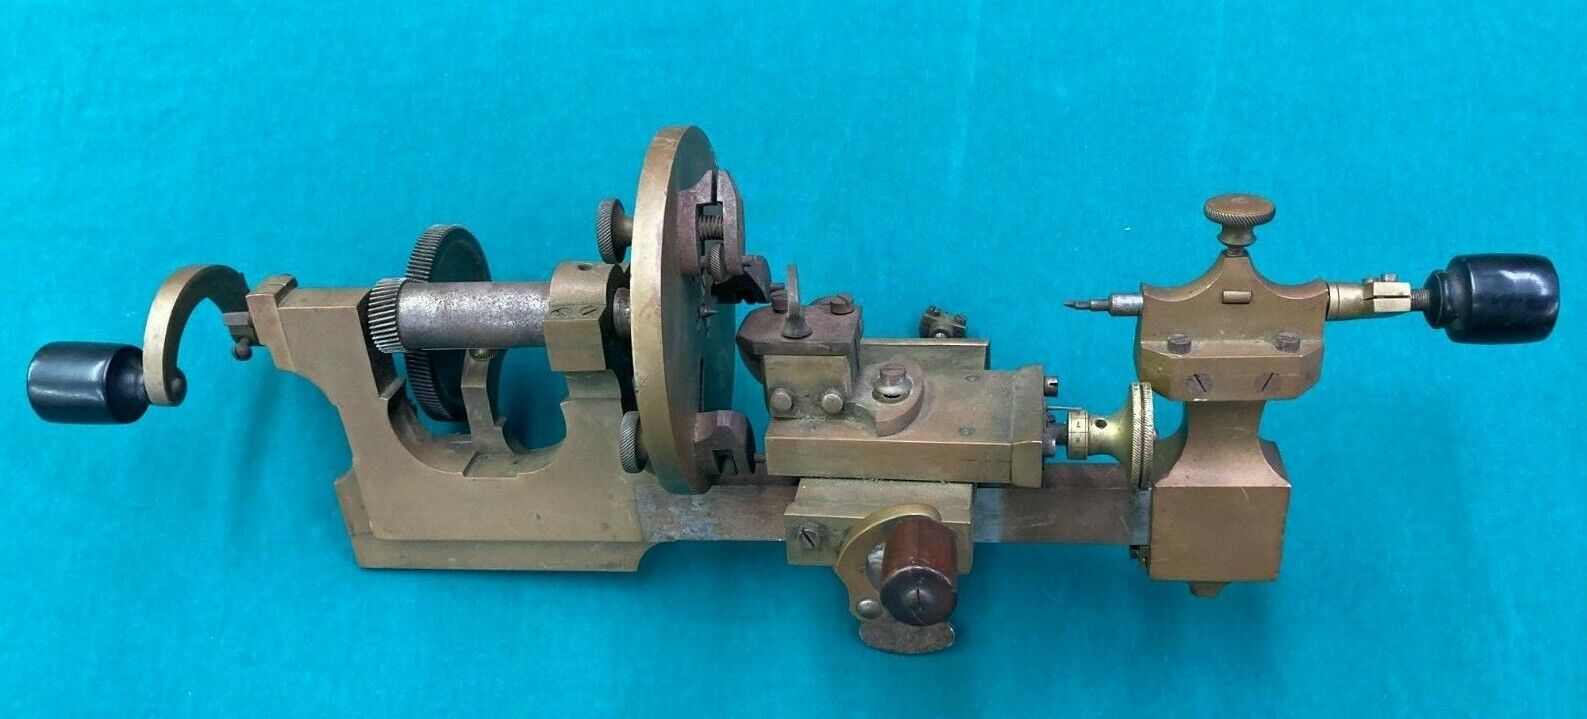 Antique Vintage Jeweler\'s Watchmaker\'s Lathe Tool Machine